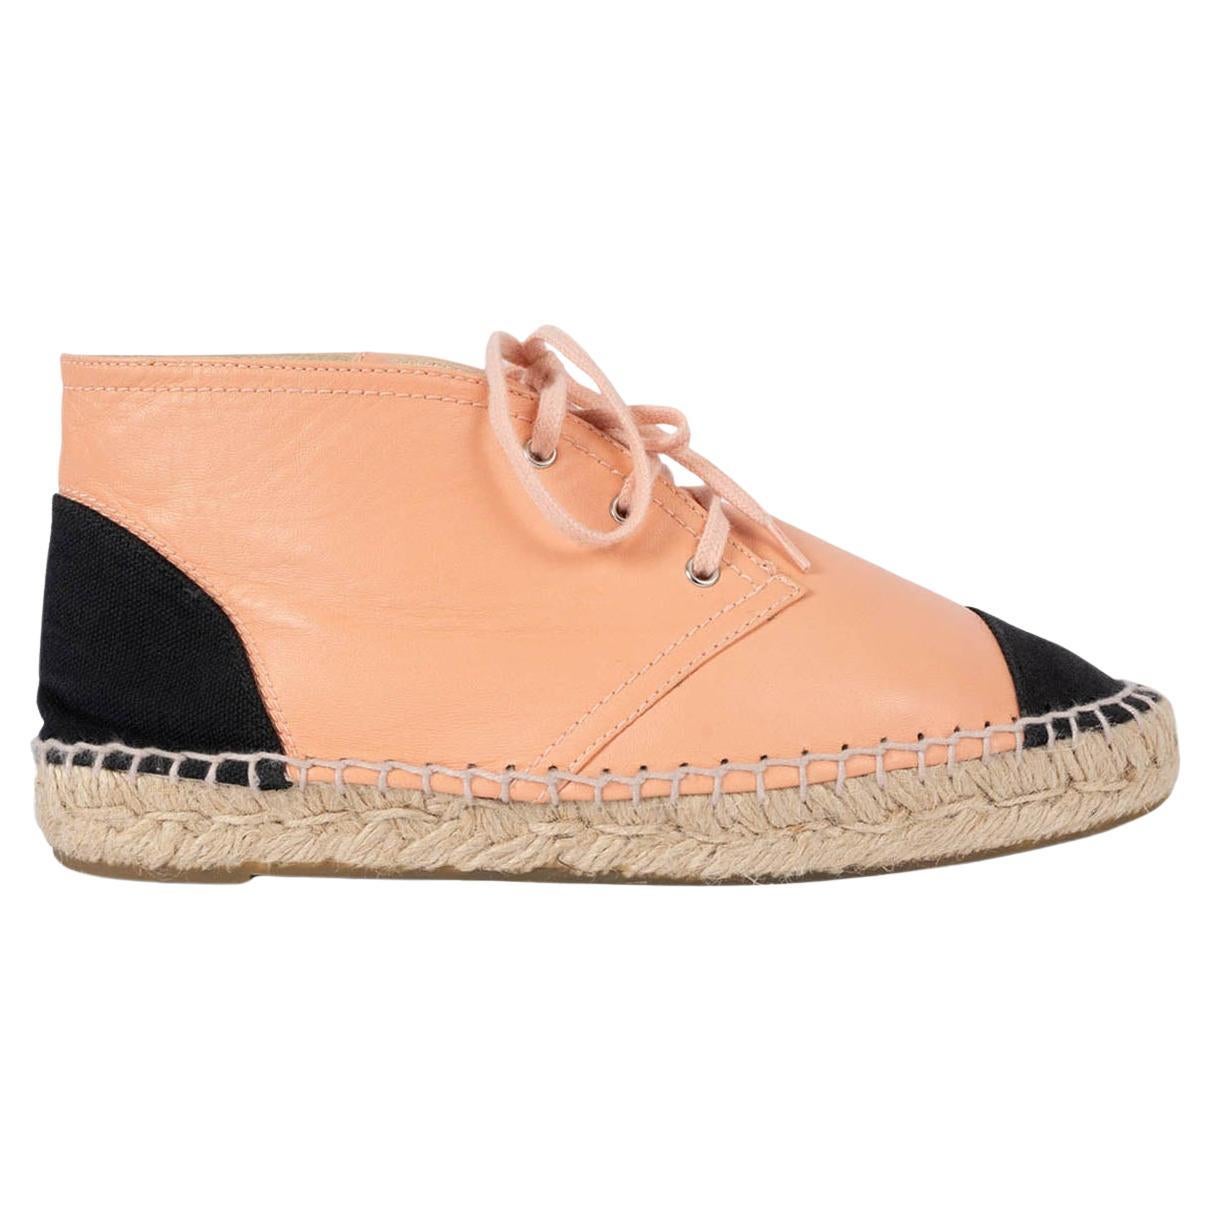 CHANEL salmon pink leather 2015 15C DUBAI ESPADRILLE Flats Shoes 37 fit 36.5 For Sale